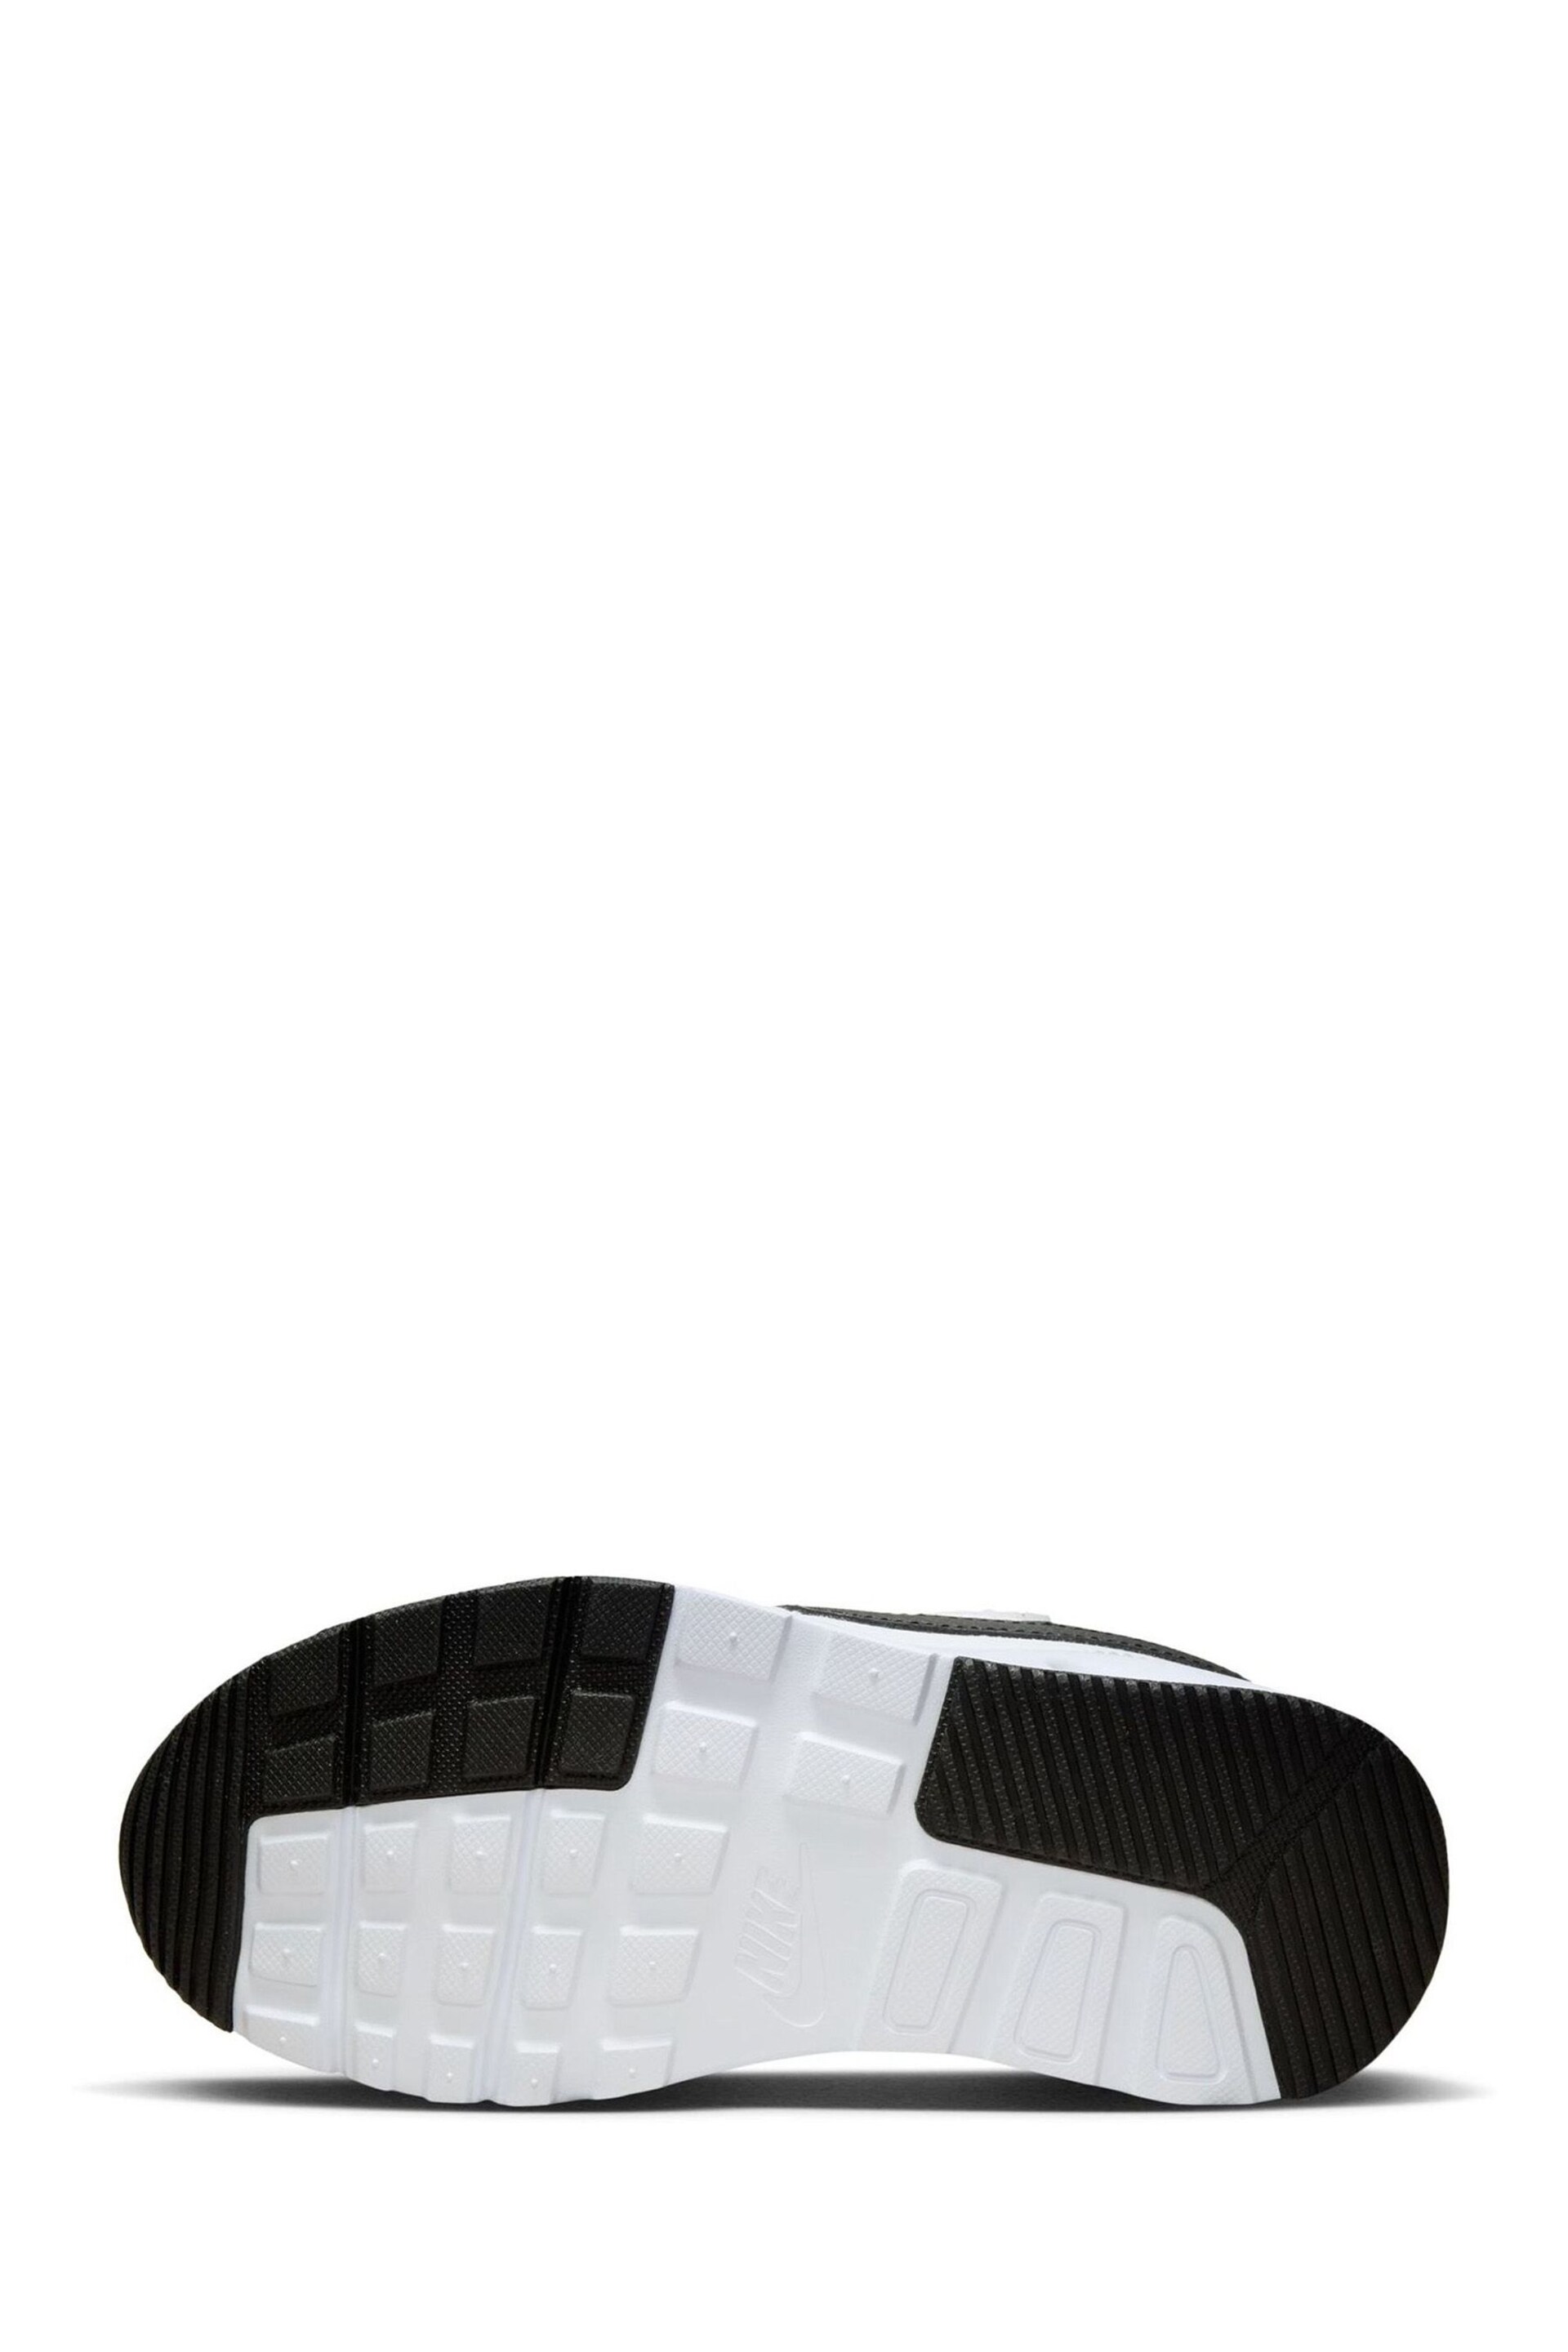 Nike White/Black Junior Air Max SC Trainers - Image 6 of 8